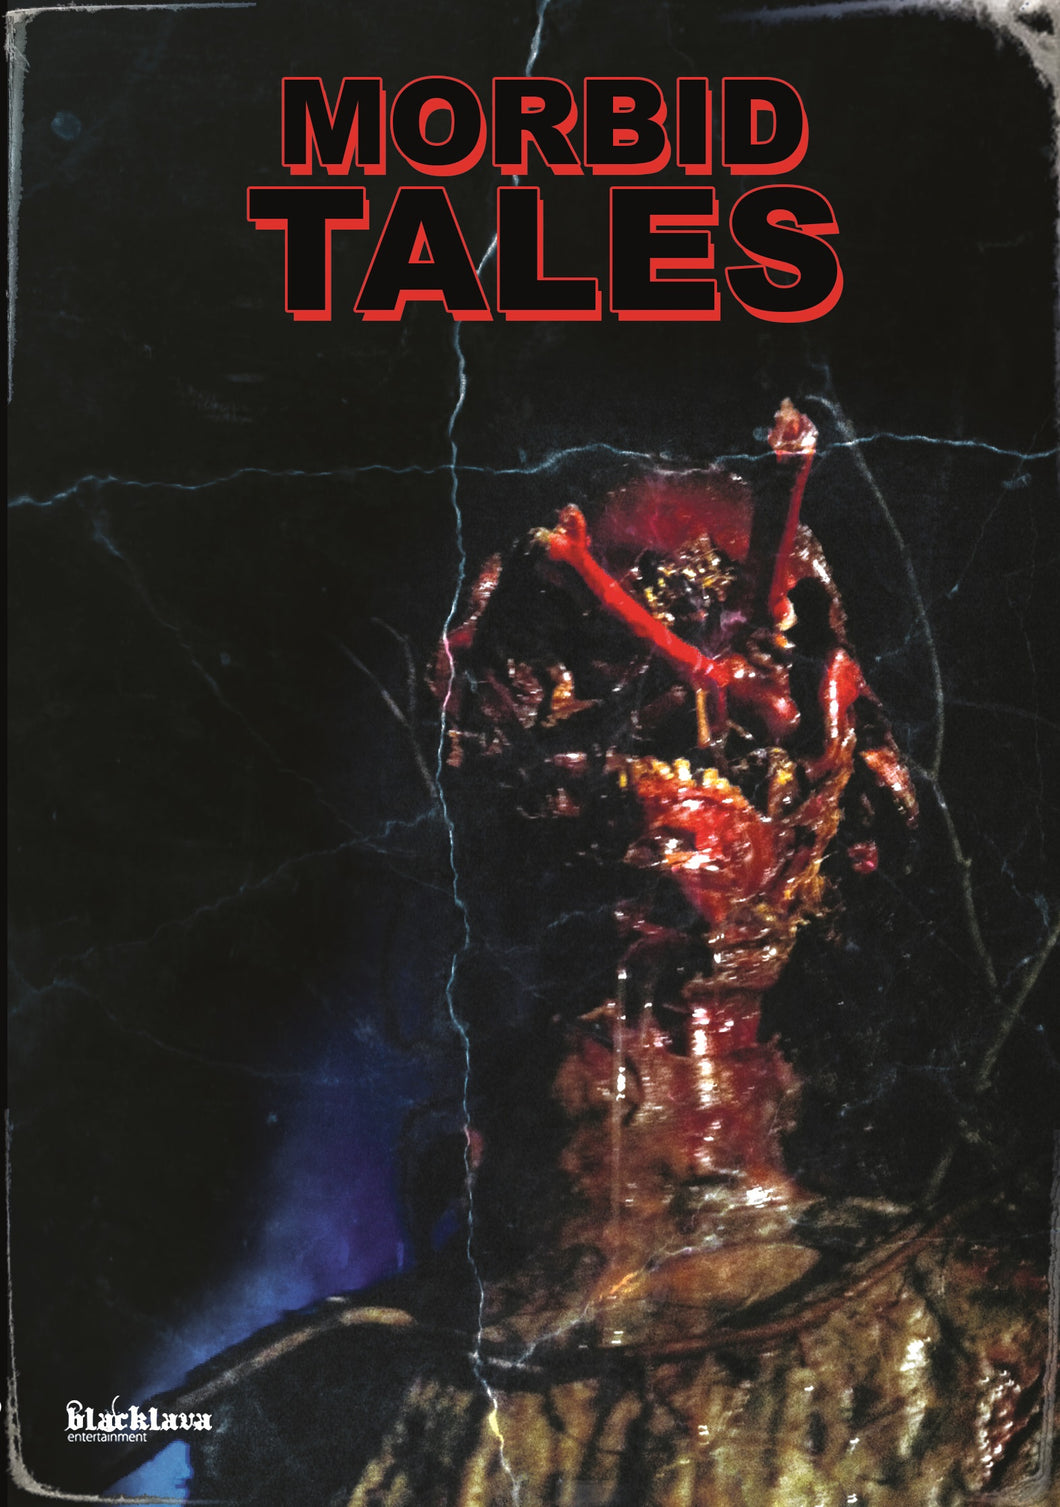 Morbid Tales by Brian Paulin - Slipcase Edition